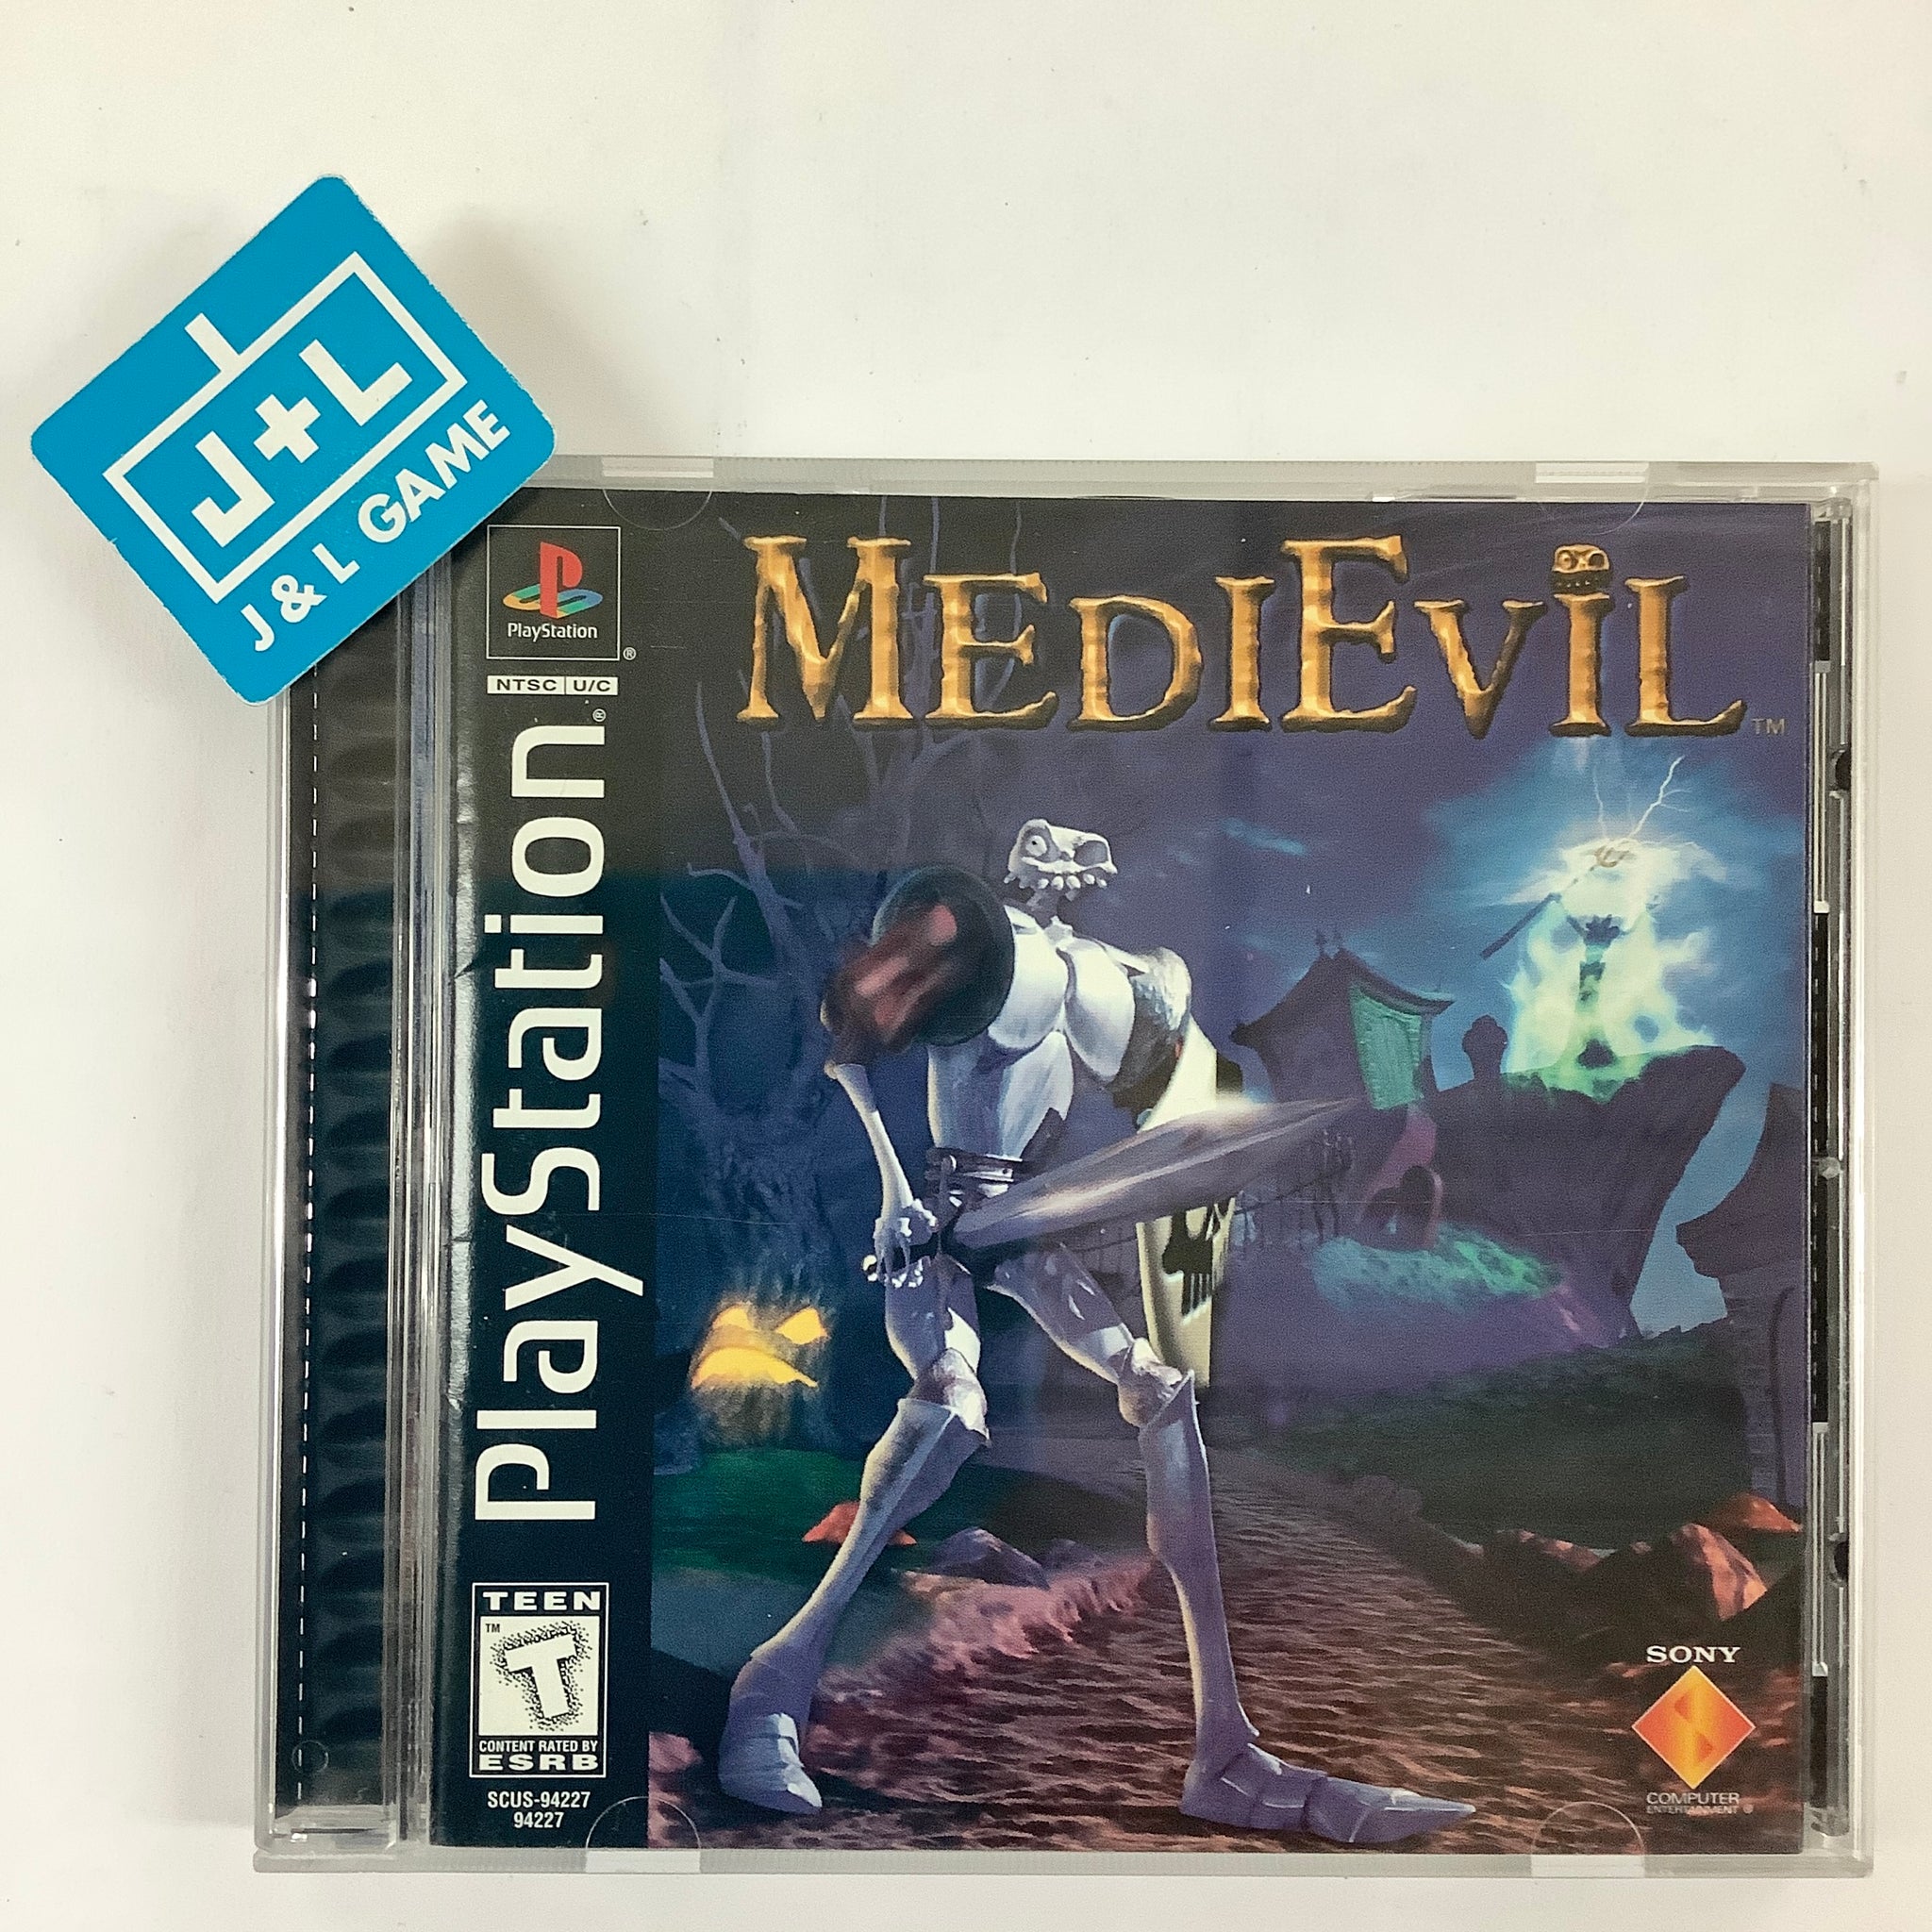 Gendanne Ernæring band MediEvil - (PS1) PlayStation 1 [Pre-Owned] – J&L Video Games New York City